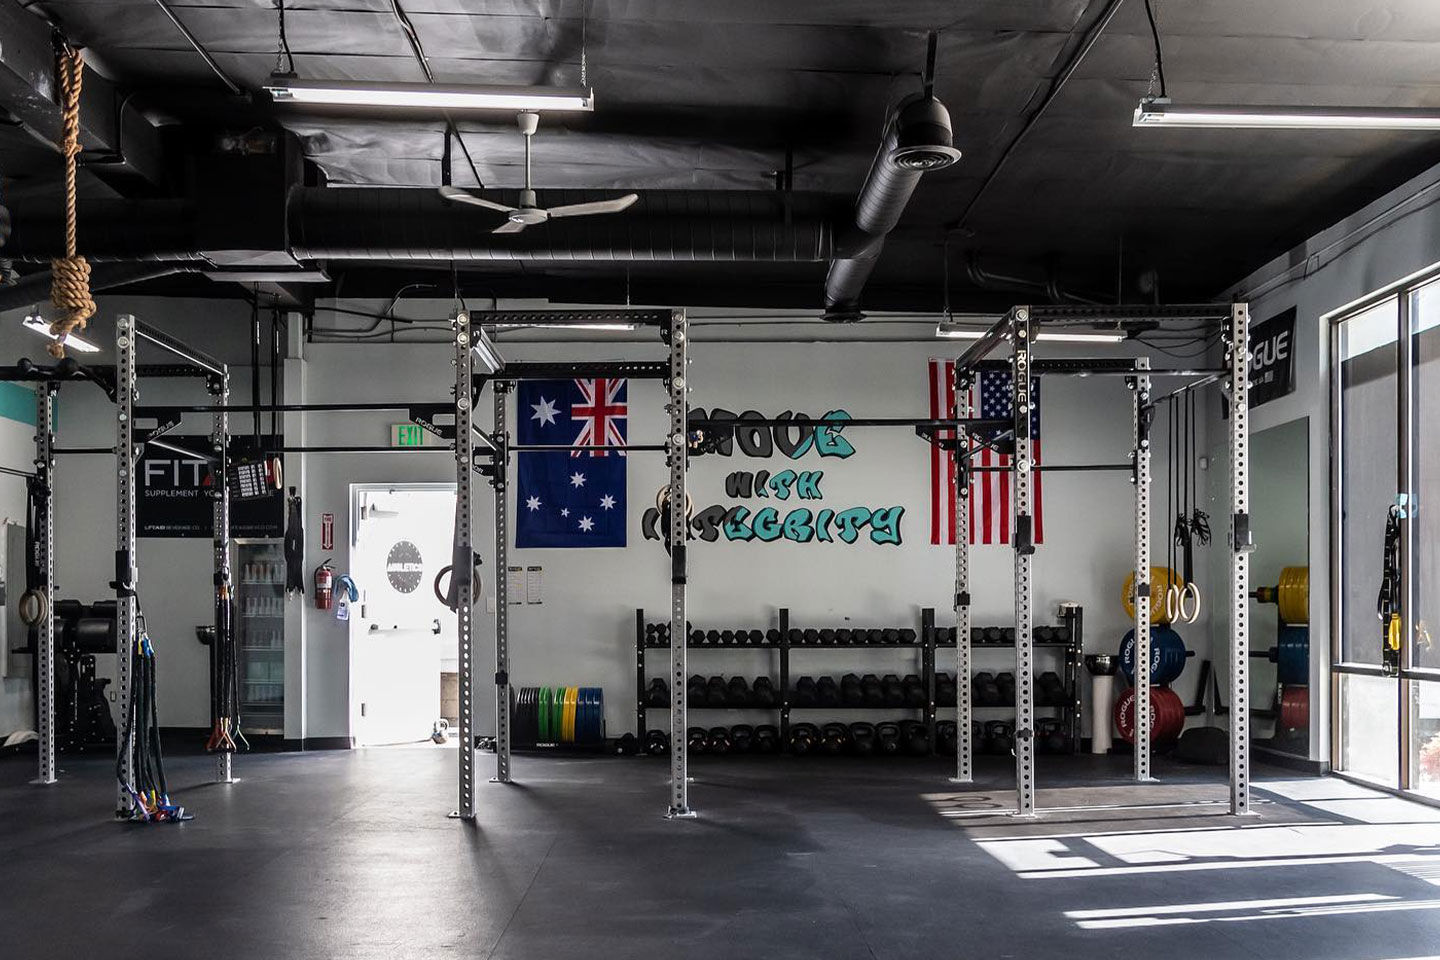 Ausletics CrossFit Gym Building Interior